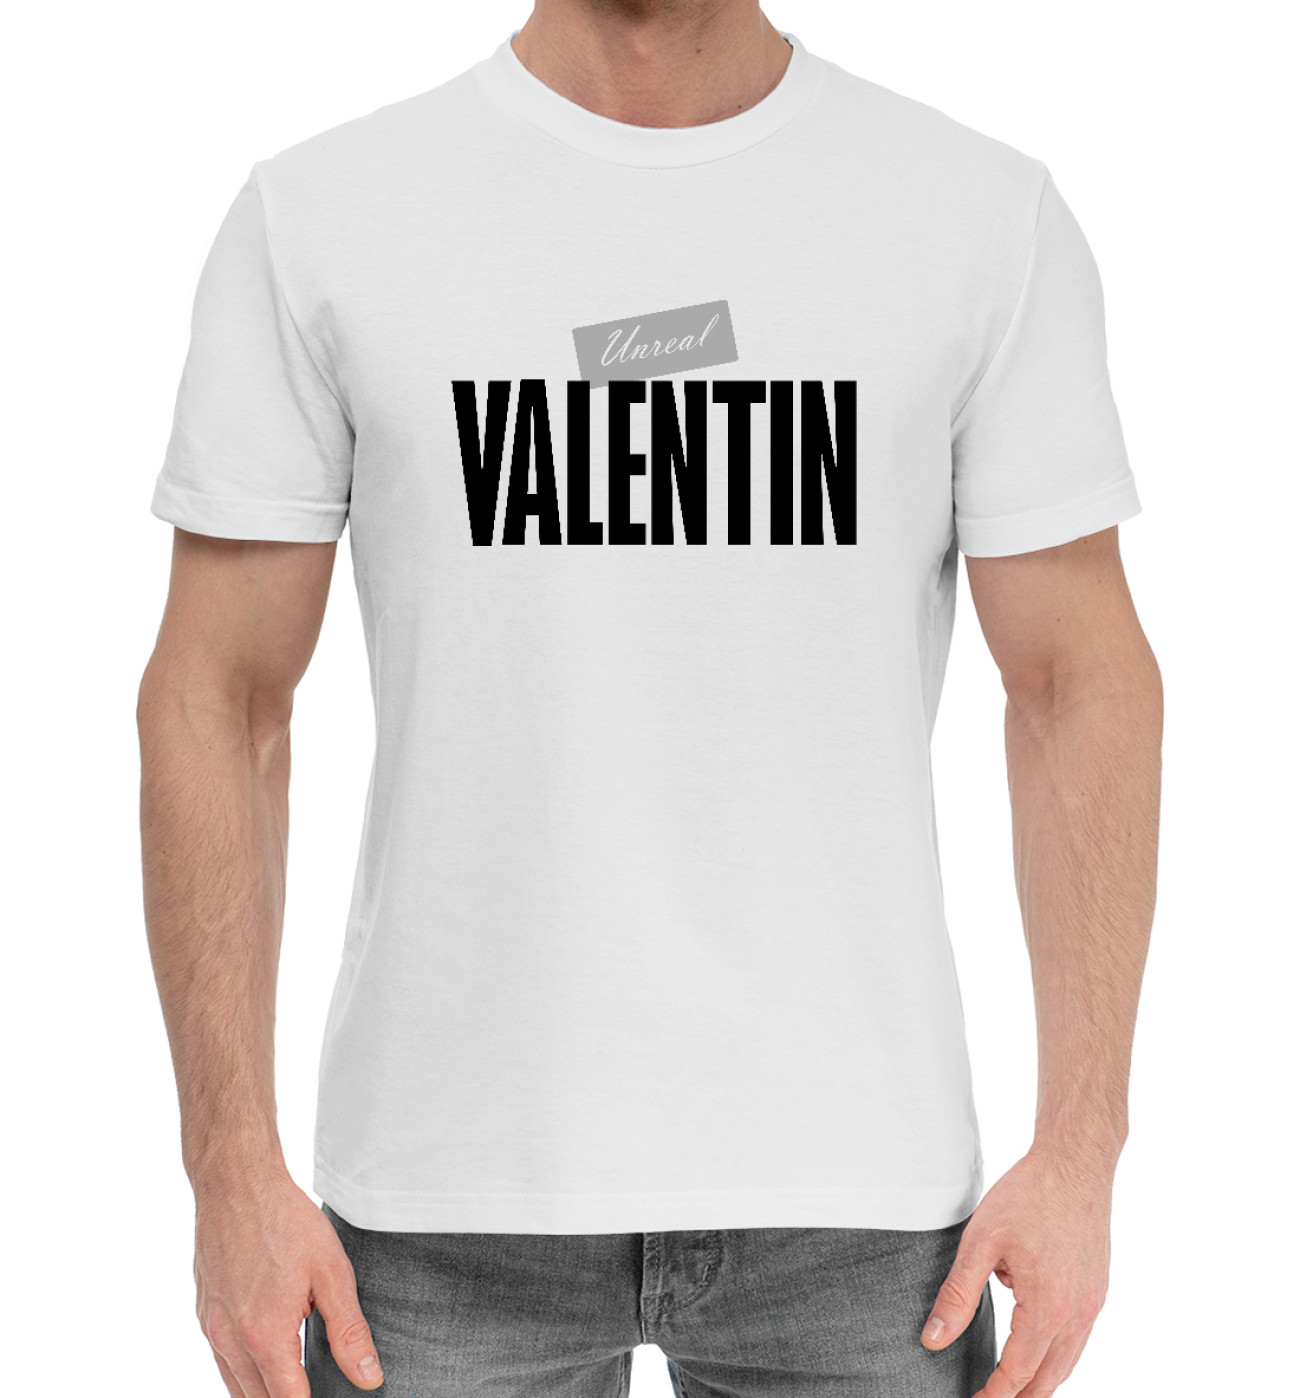 Мужская Хлопковая футболка Валентин, артикул: VAE-396140-hfu-2